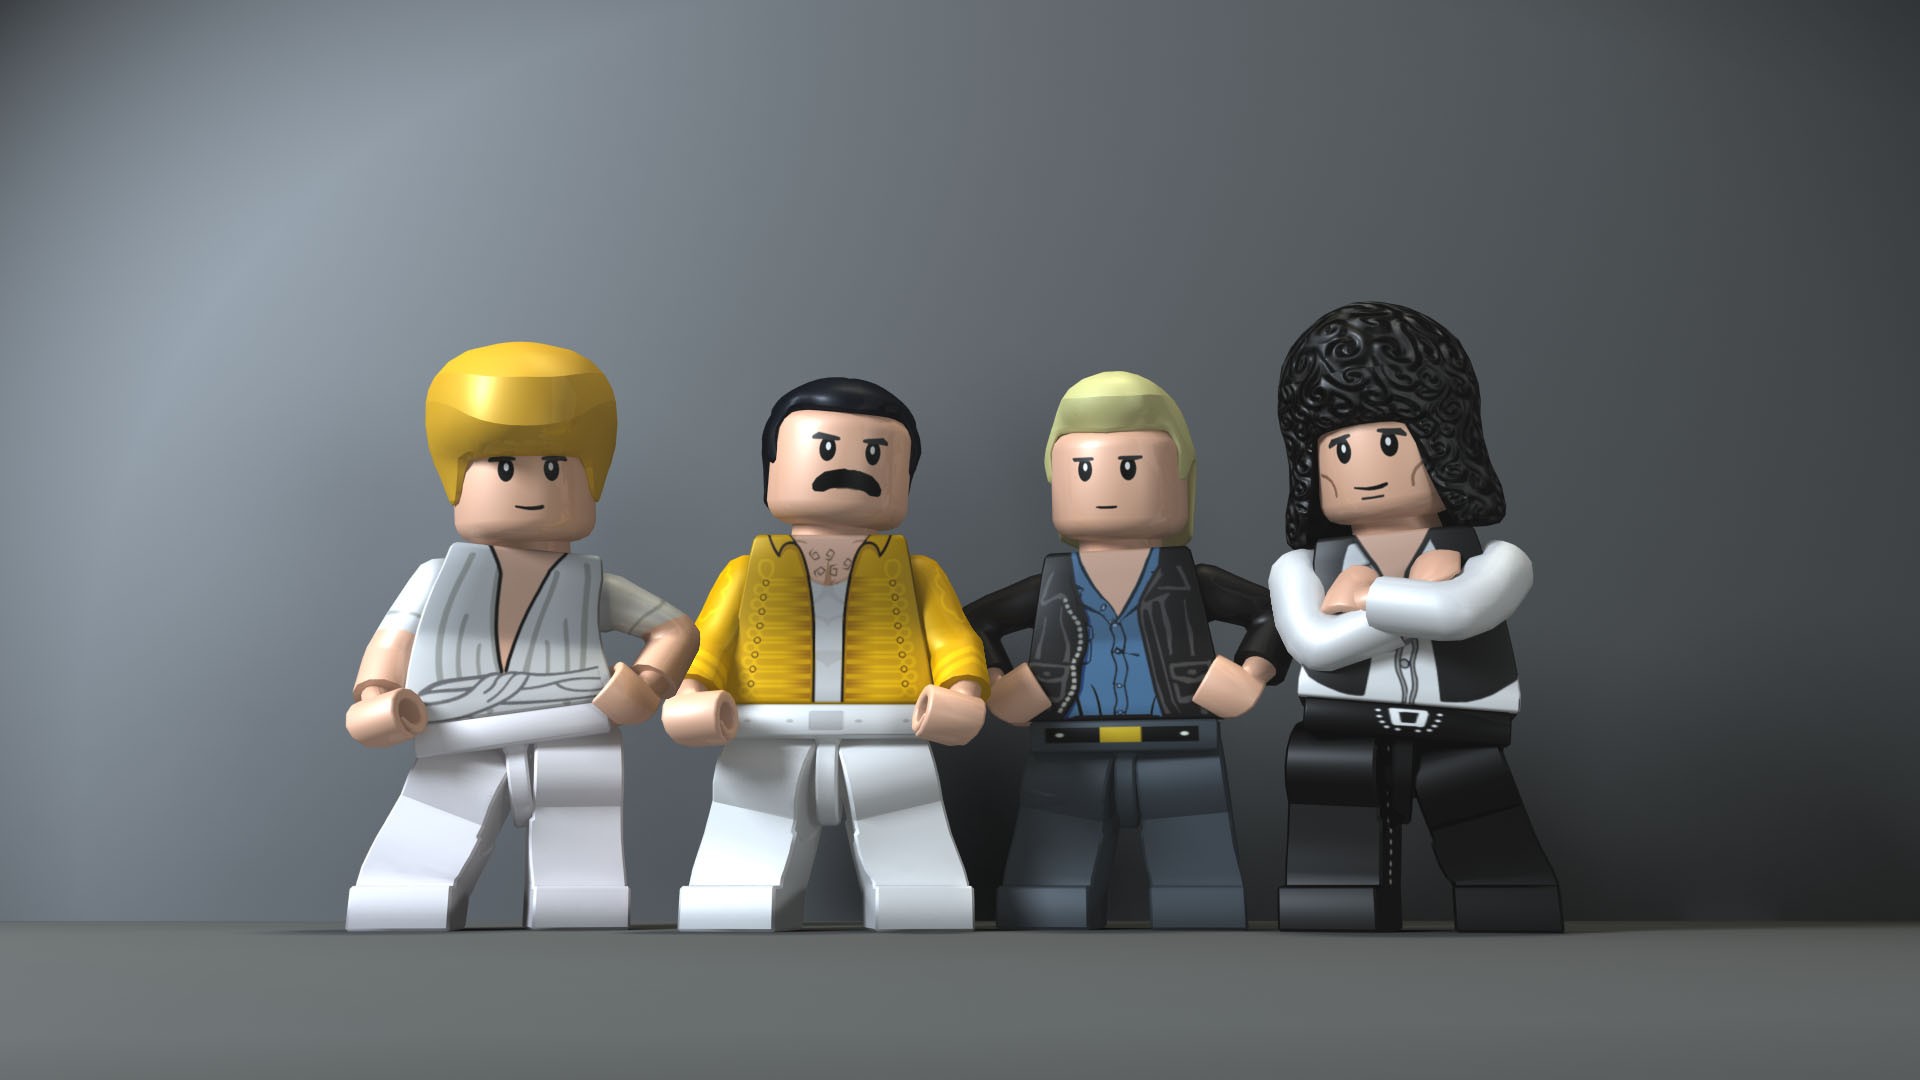 General 1920x1080 gray background digital art LEGO Queen  musician Freddie Mercury Brian May John Deacon figurines legend music CGI render